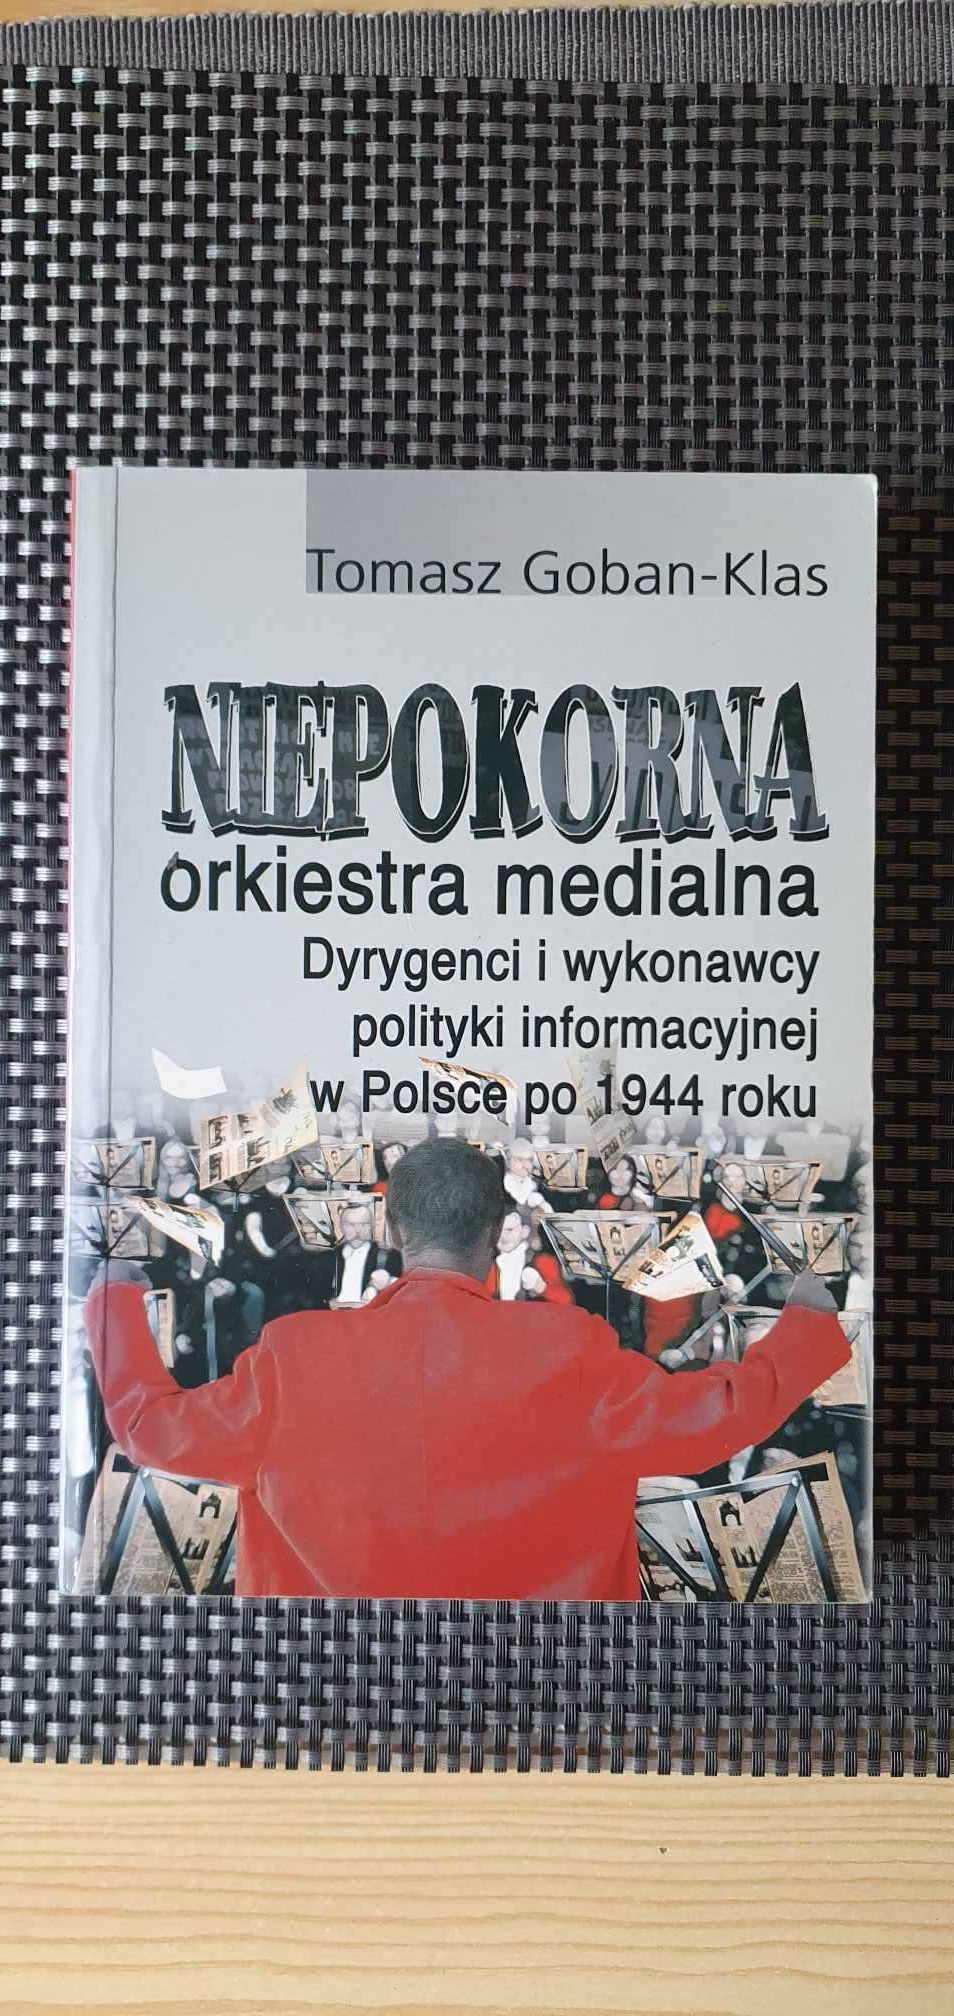 Książka "Niepokorna orkiestra medialna" Tomasz Goban-Klas